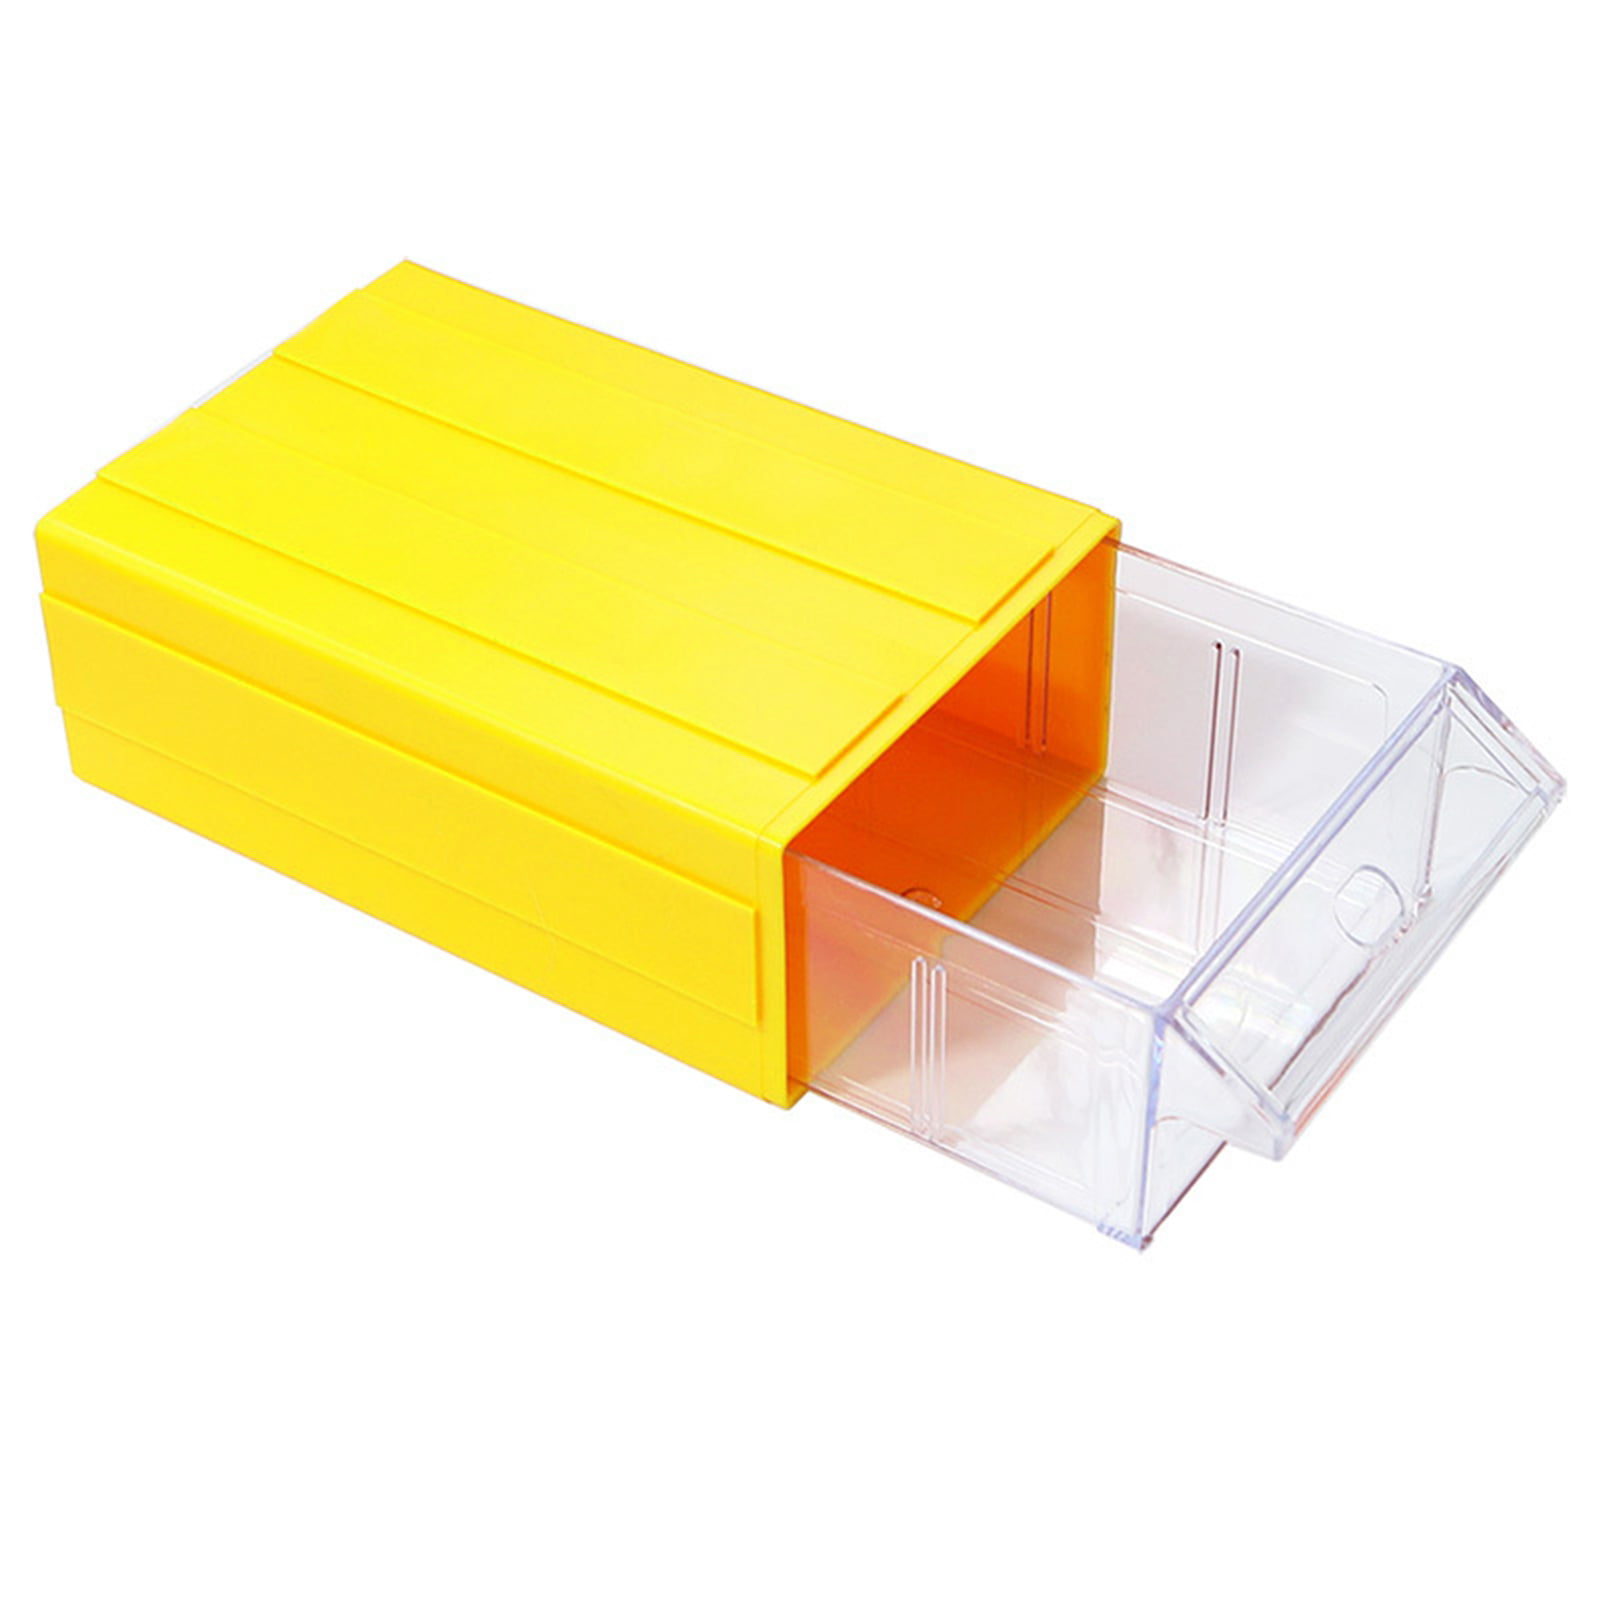 Xinhuadsh Diamond Painting Storage Case Drawer Design 1 Set Tidy-keeping Nail Art Storage Box Dust-proof Useful Craft Tool, Size: Round, Yellow